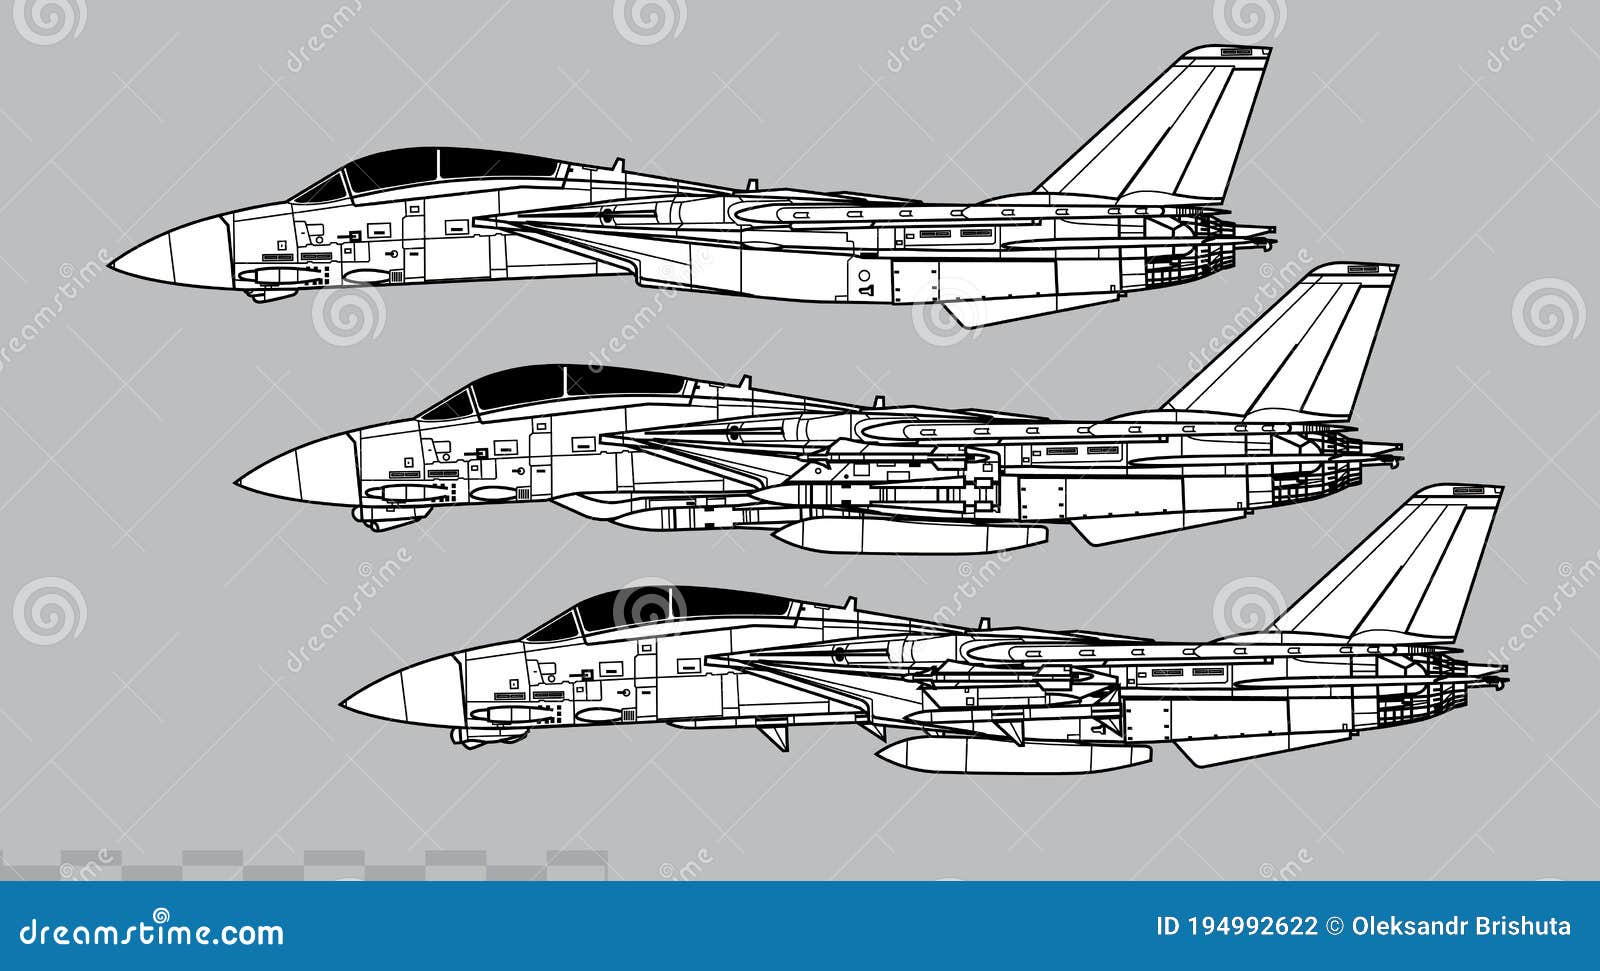 grumman f-14 tomcat.  drawing of navy supersonic interceptor.